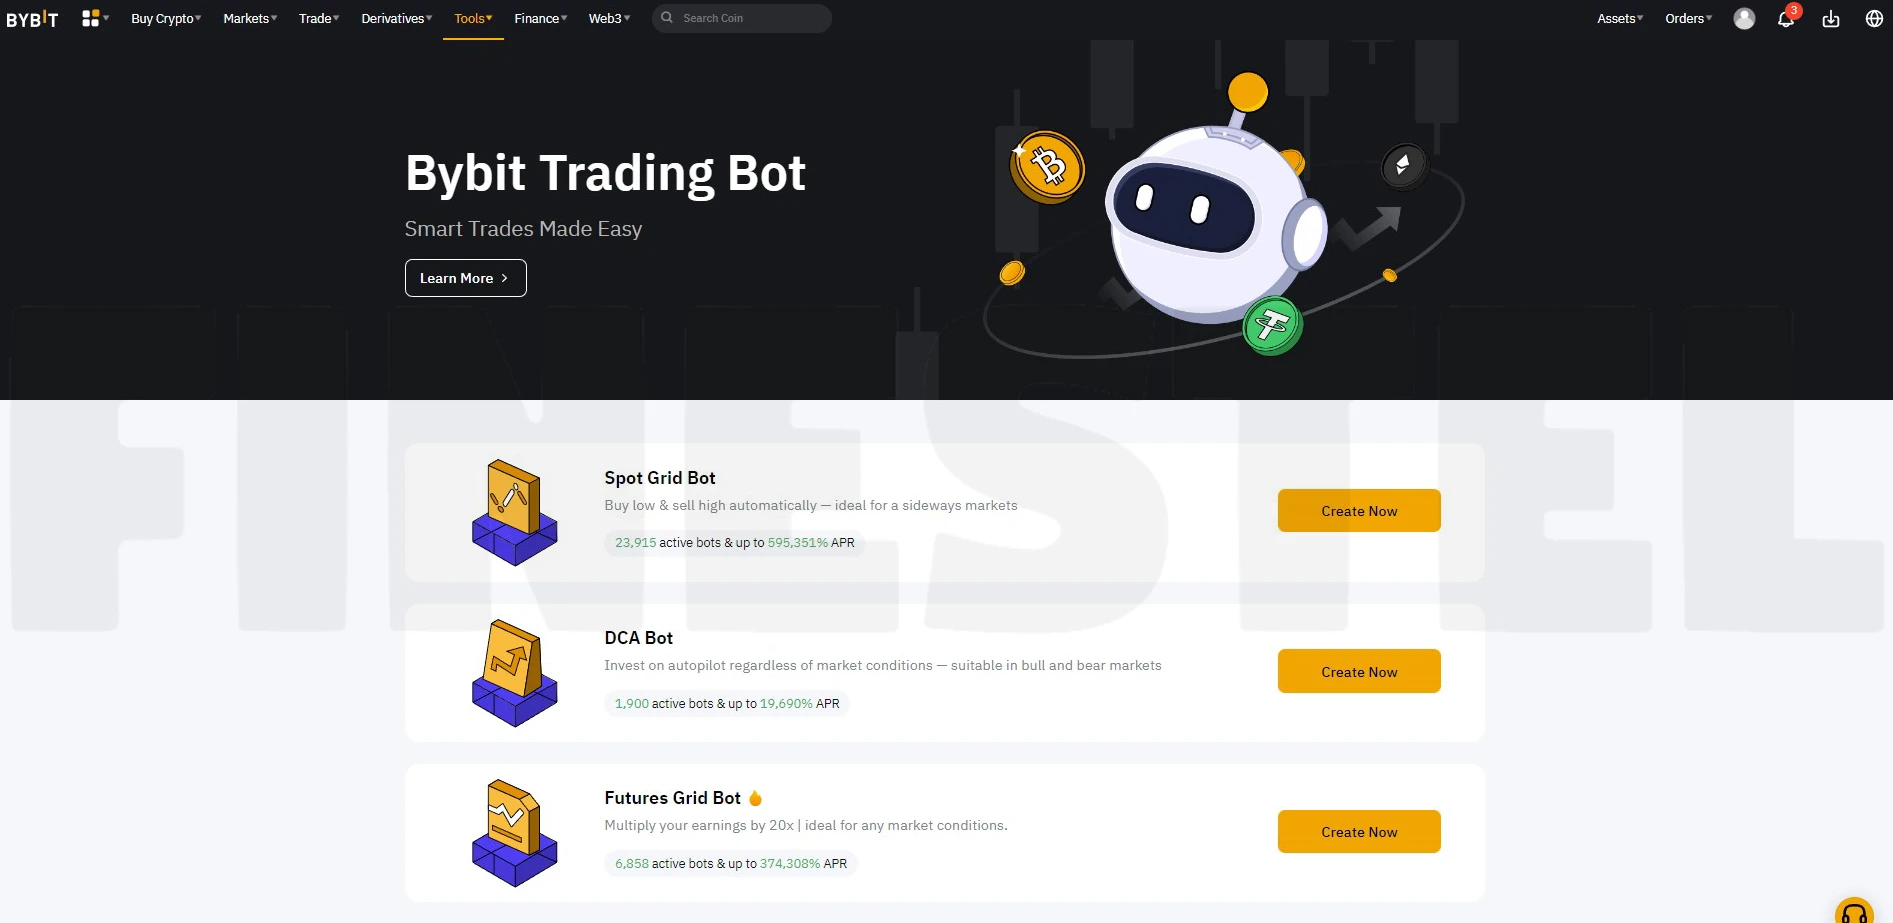 Bybit trading bots